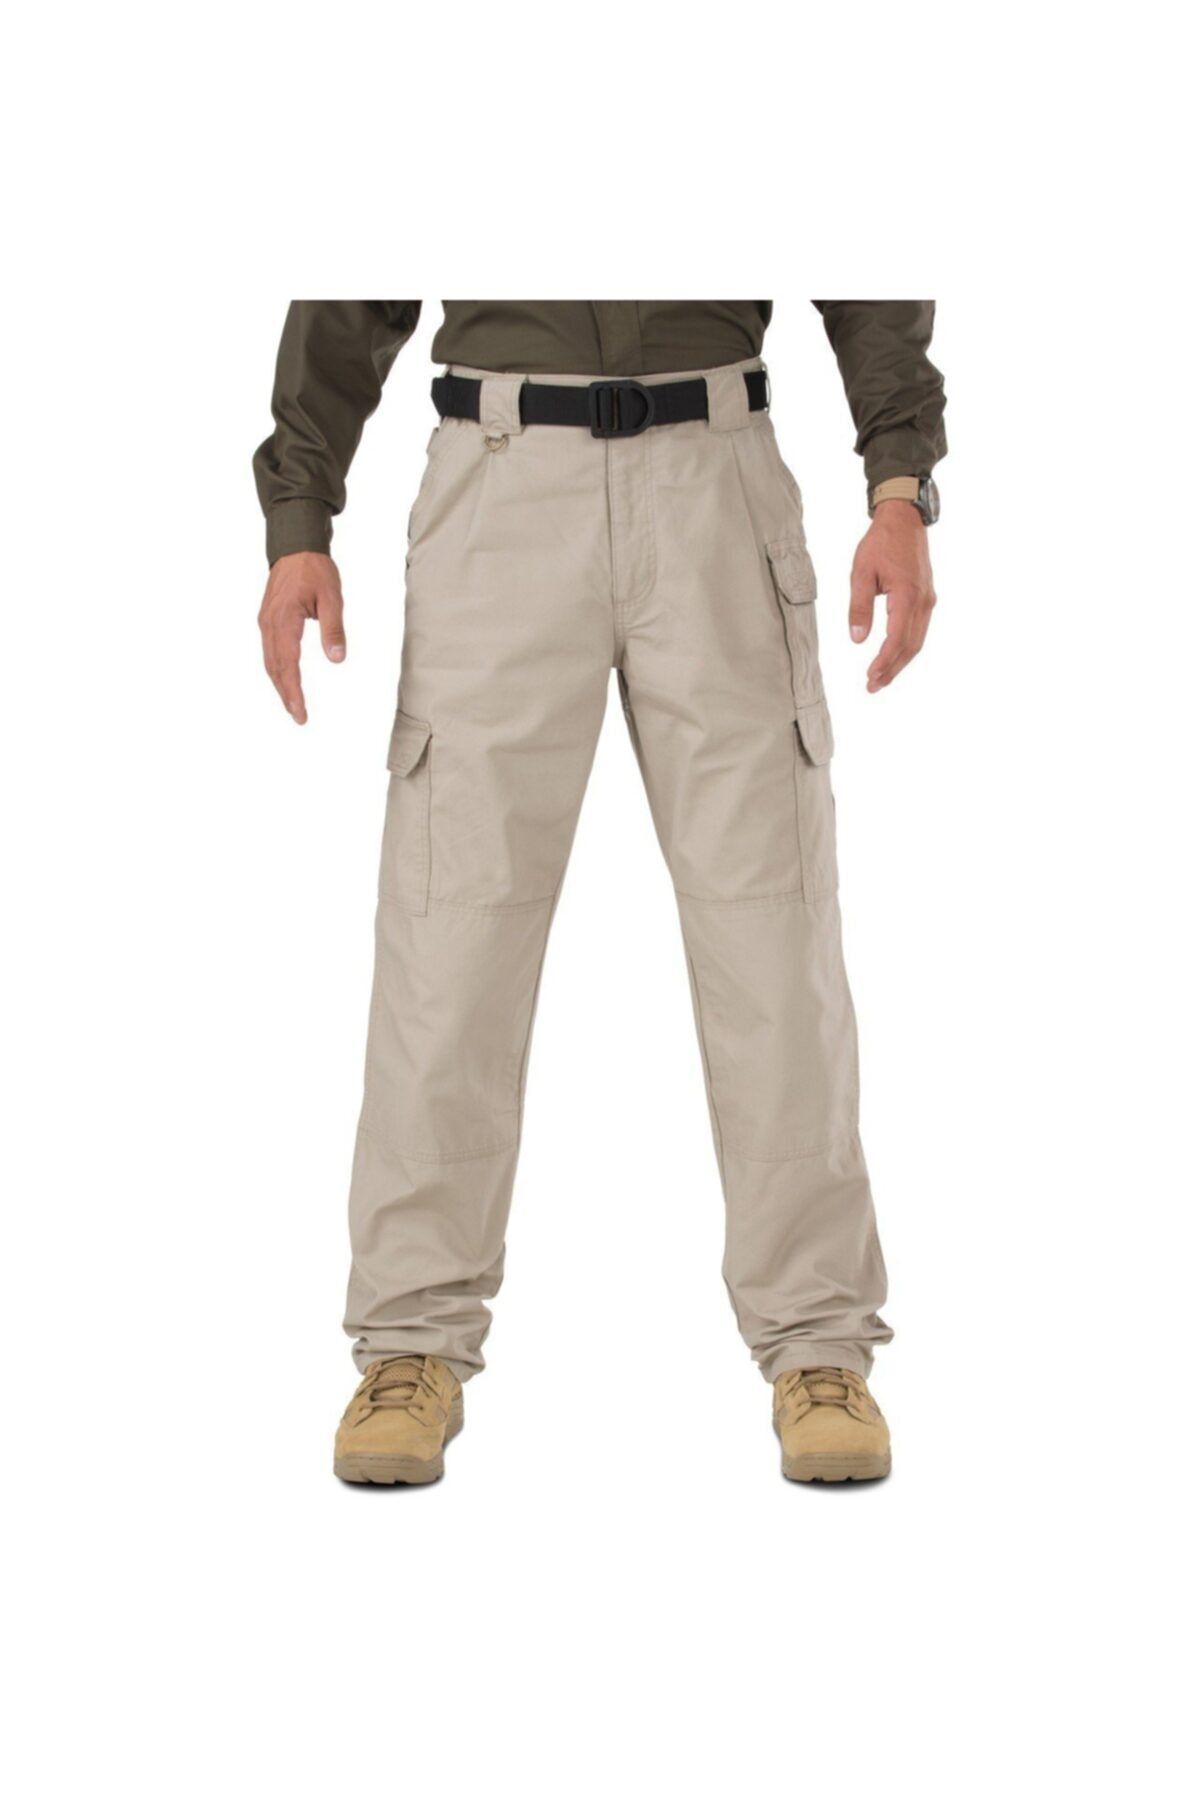 5.11 Tactical Pantolon Khakı